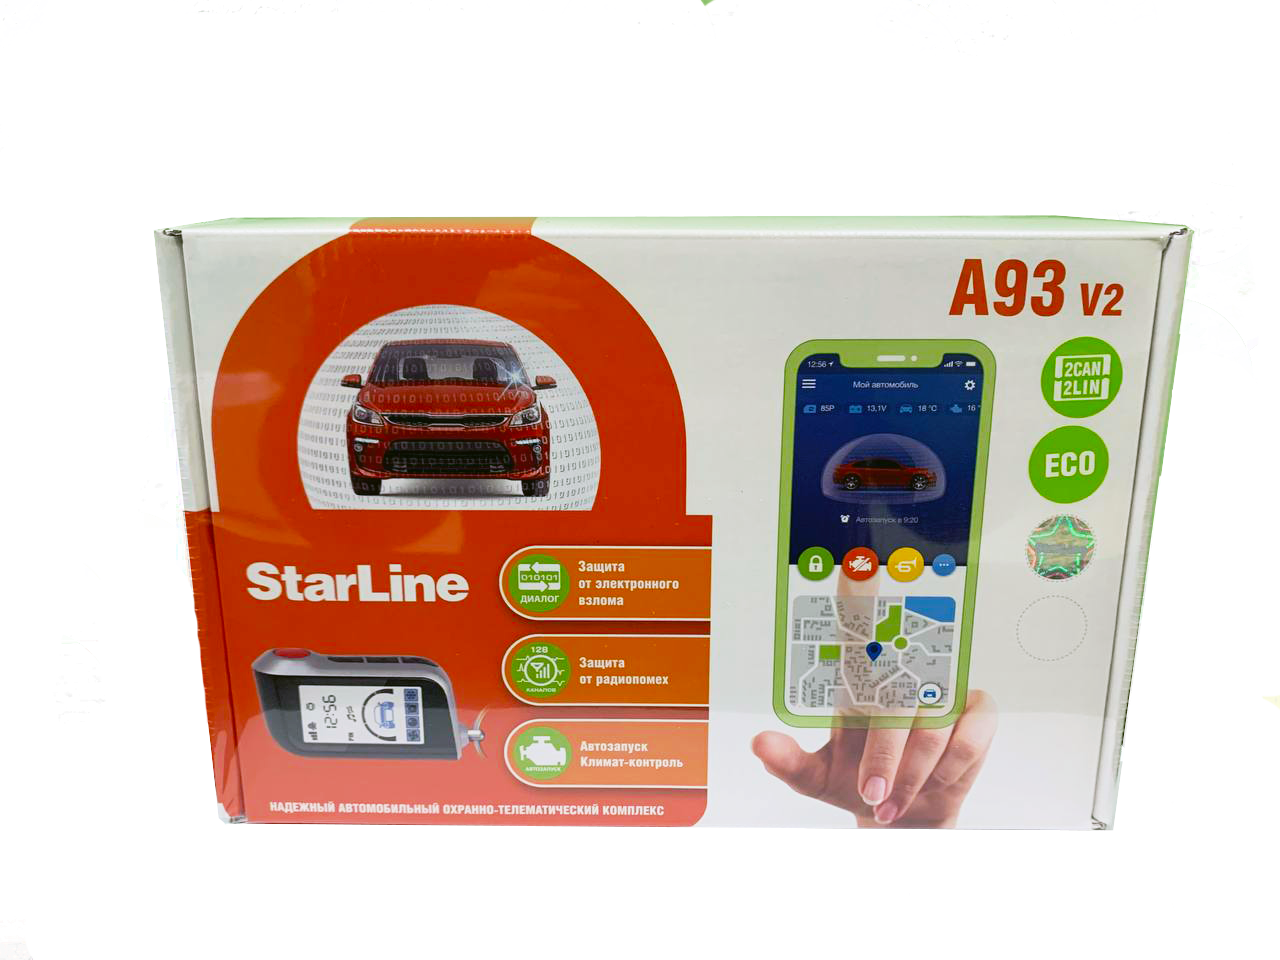 Starline a93 2can eco. Автосигнализация STARLINE a93 v2 Eco. Старлайн а93 2 Кан 2 Лин эко. STARLINE a93 v2 2can+2lin Eco. Автосигнализация STARLINE a93 2can+2lin.